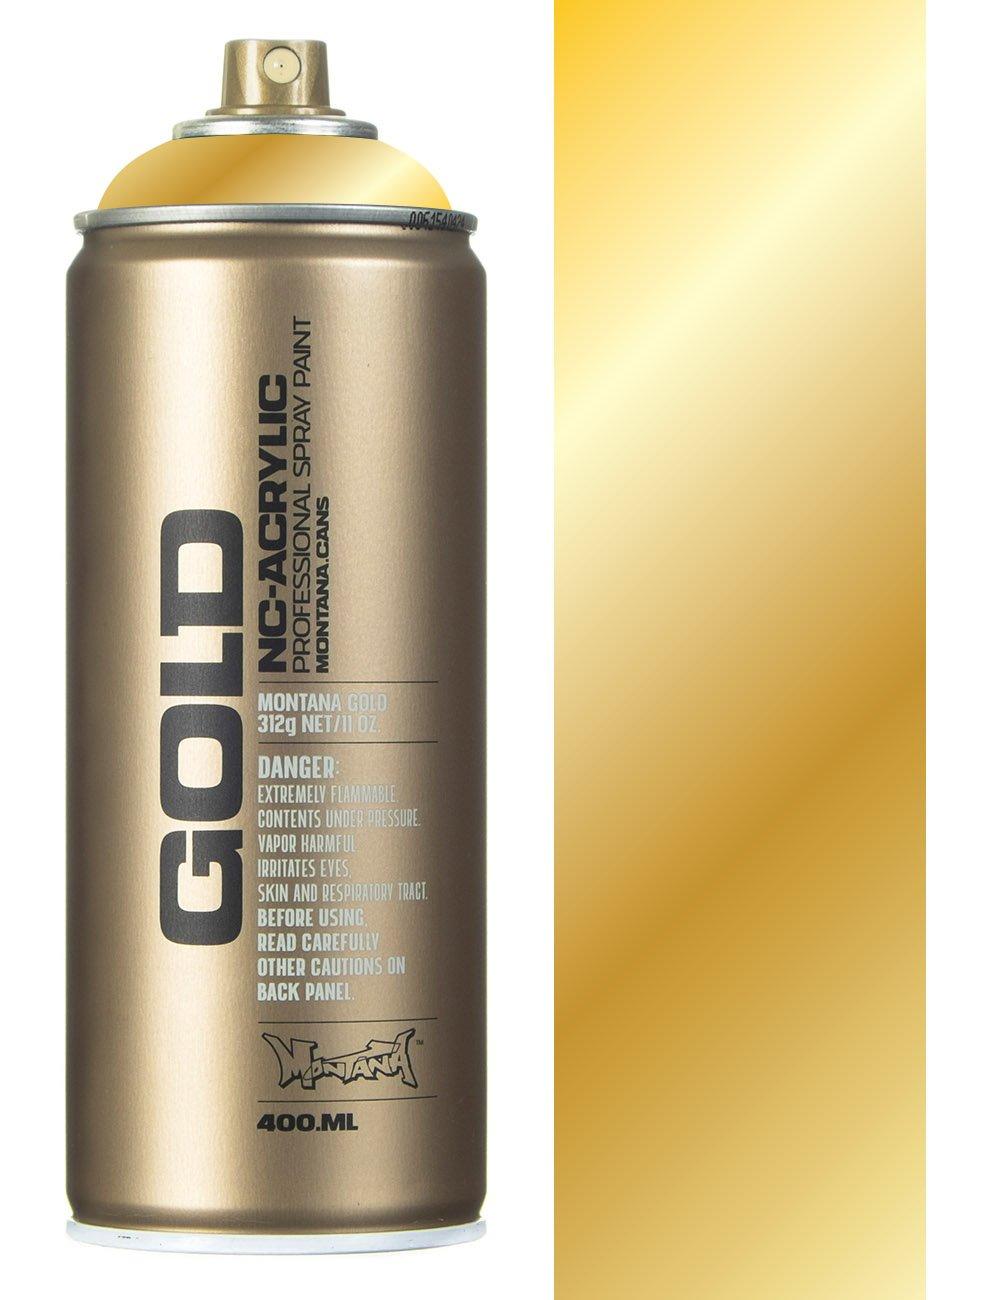 spray-paint-400ml-gold-chrome-m3000-p2622-52296_zoom.jpg